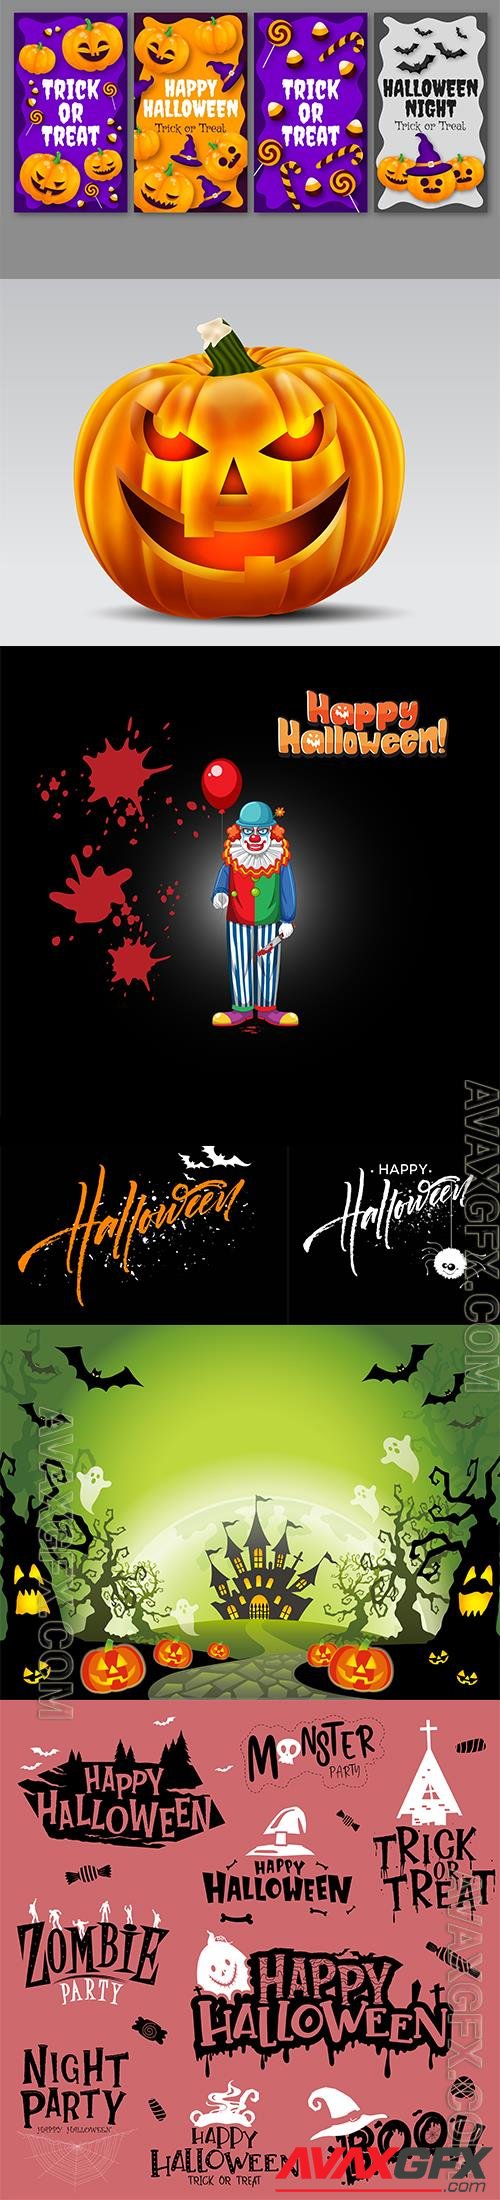 Happy halloween celebration collection vol10